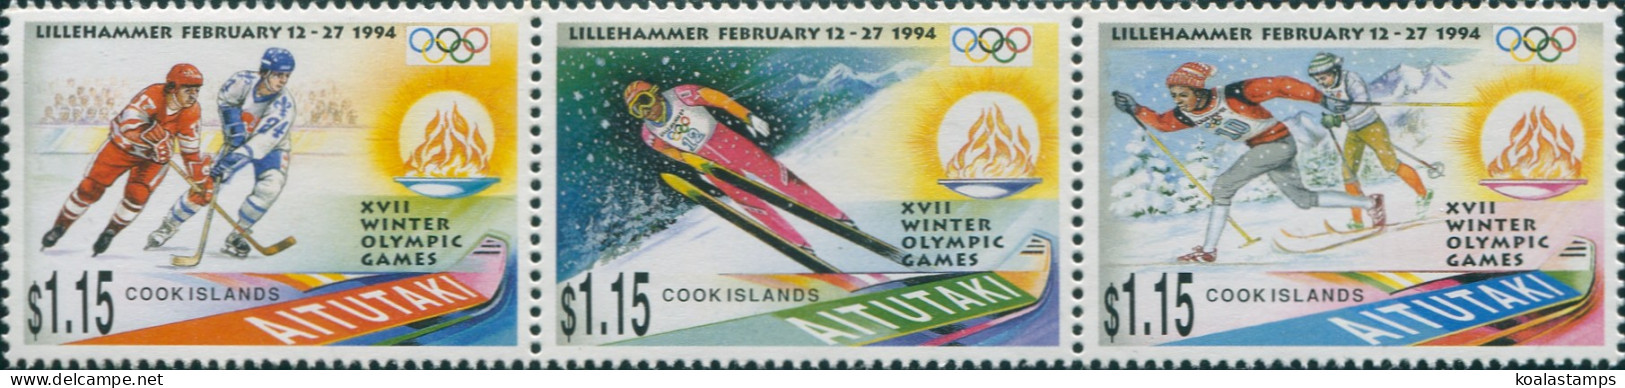 Aitutaki 1994 SG658-660 Winter Olympics Set MNH - Cook